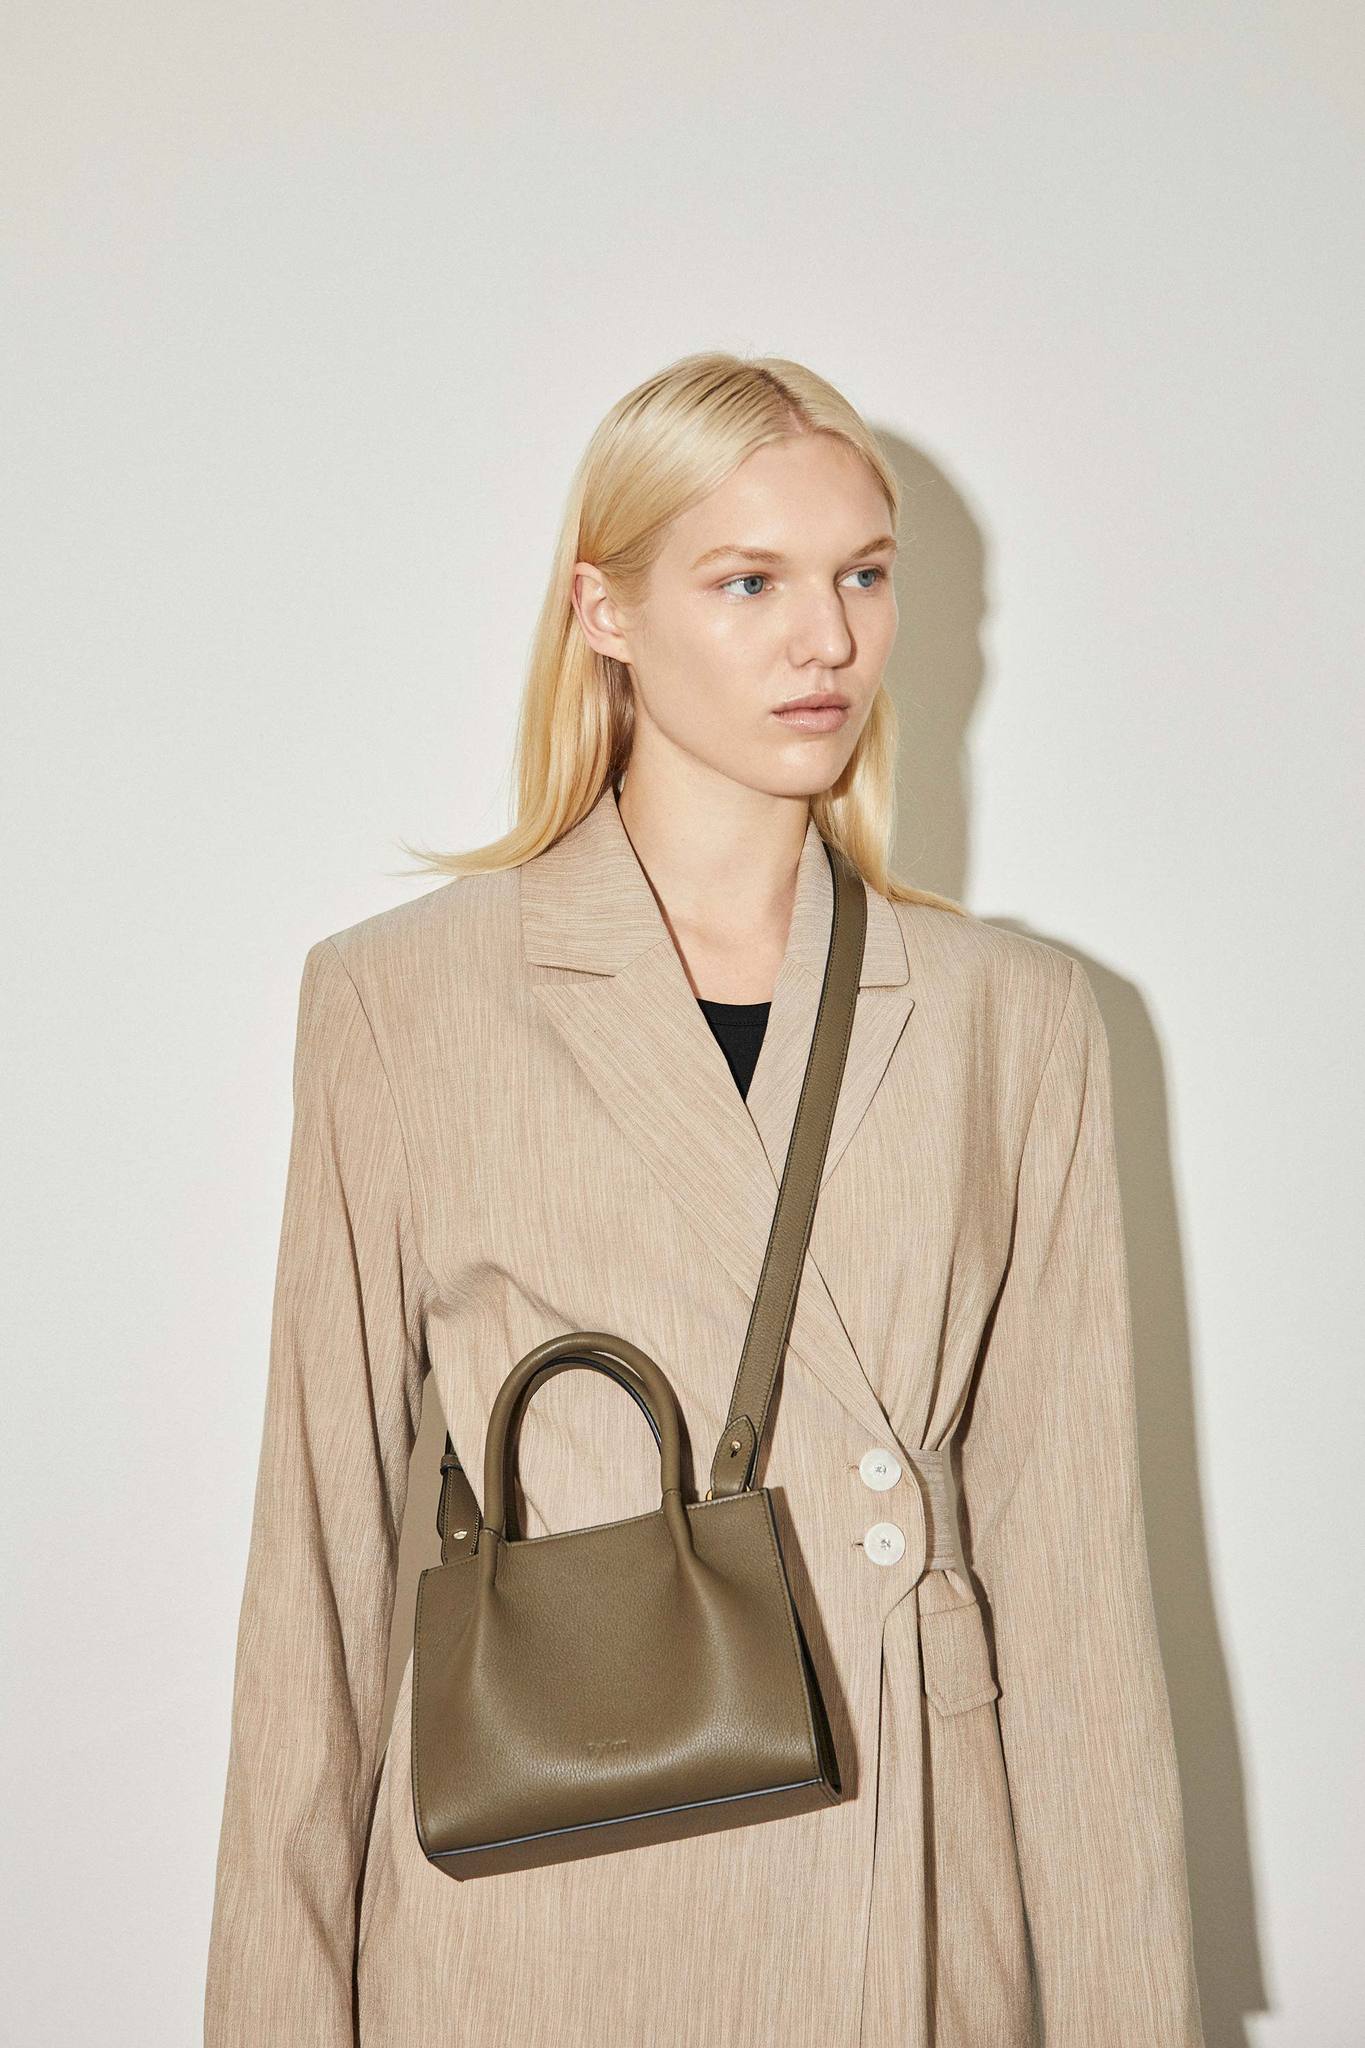 An Australian designer bag by Rylan offers timeless style.